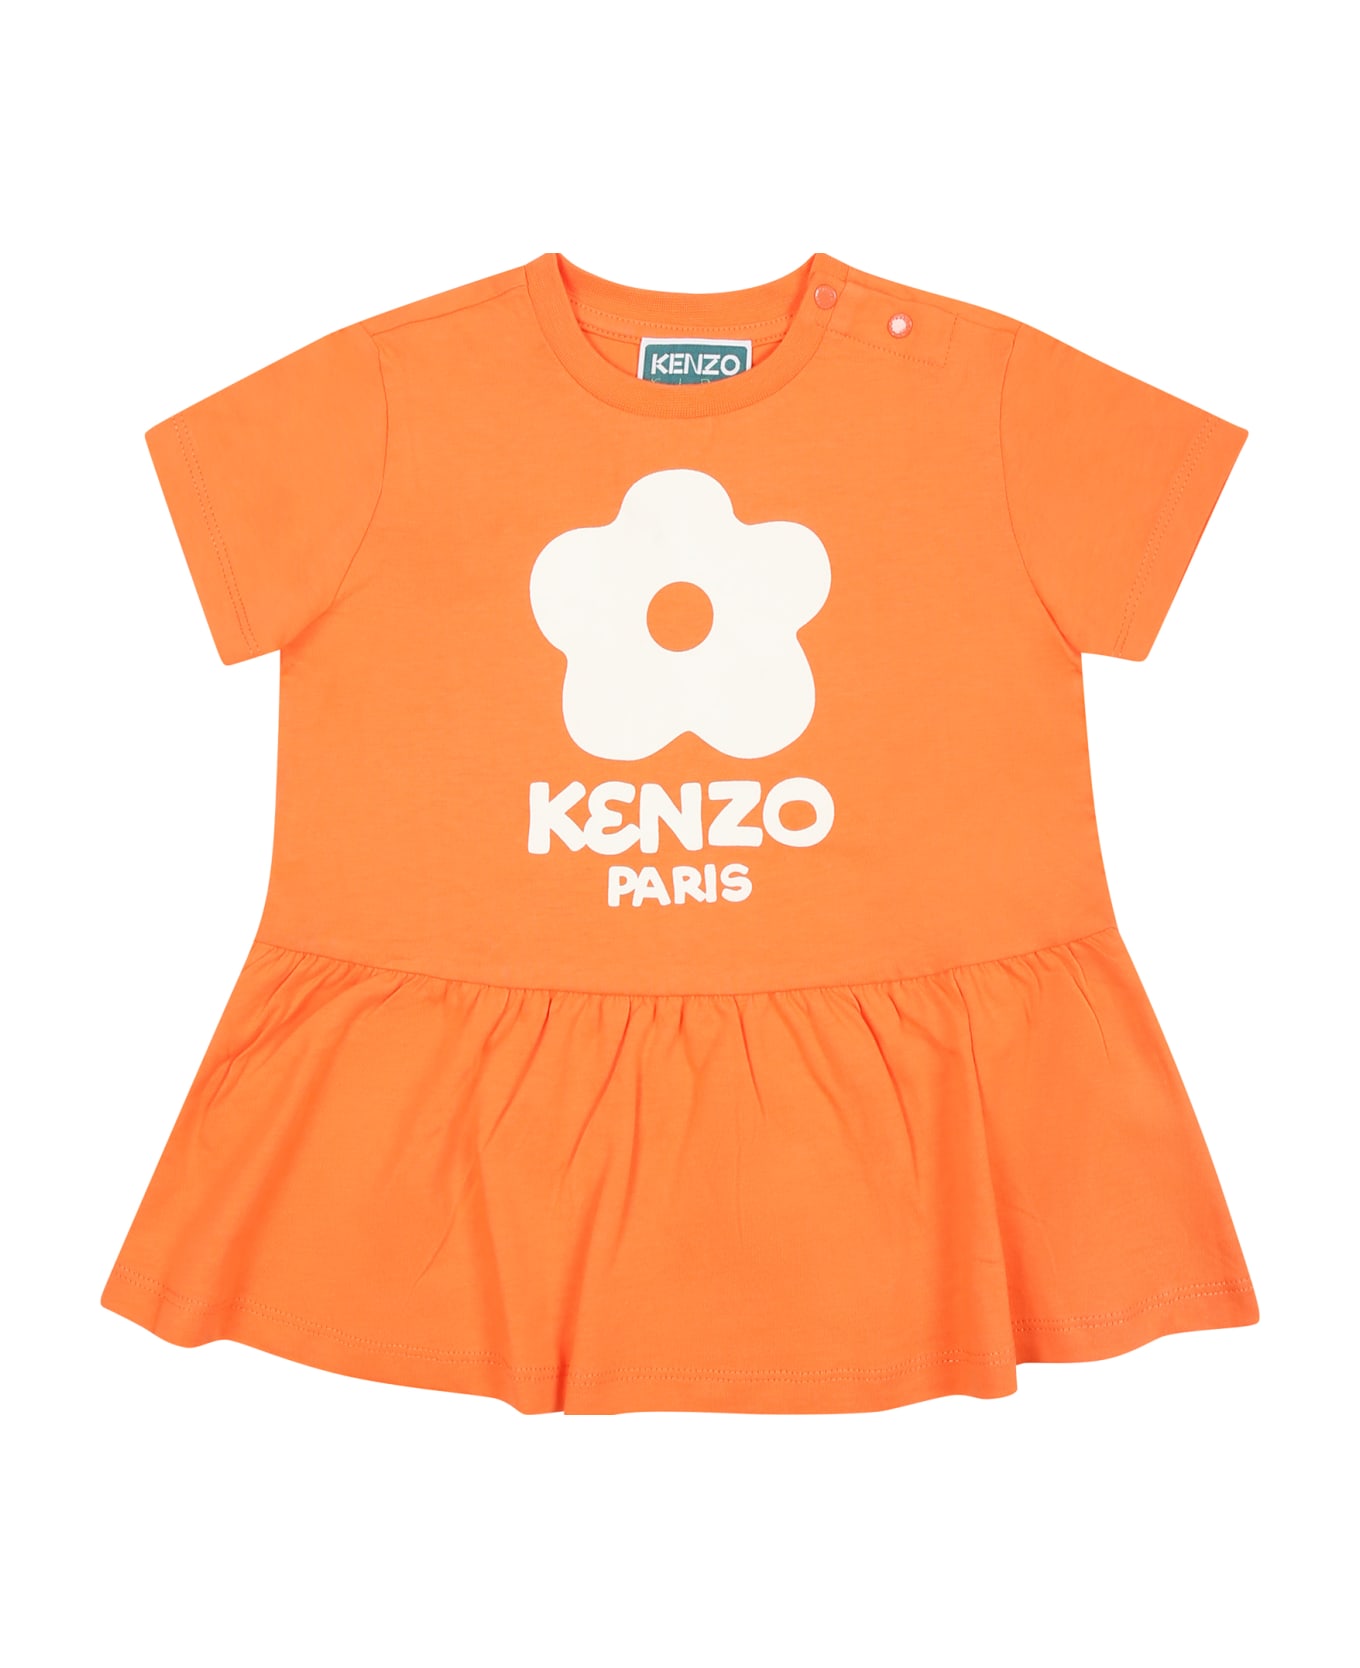 Kenzo Kids Orange Casual Dress For Baby Girl With Boke Flower - Orange